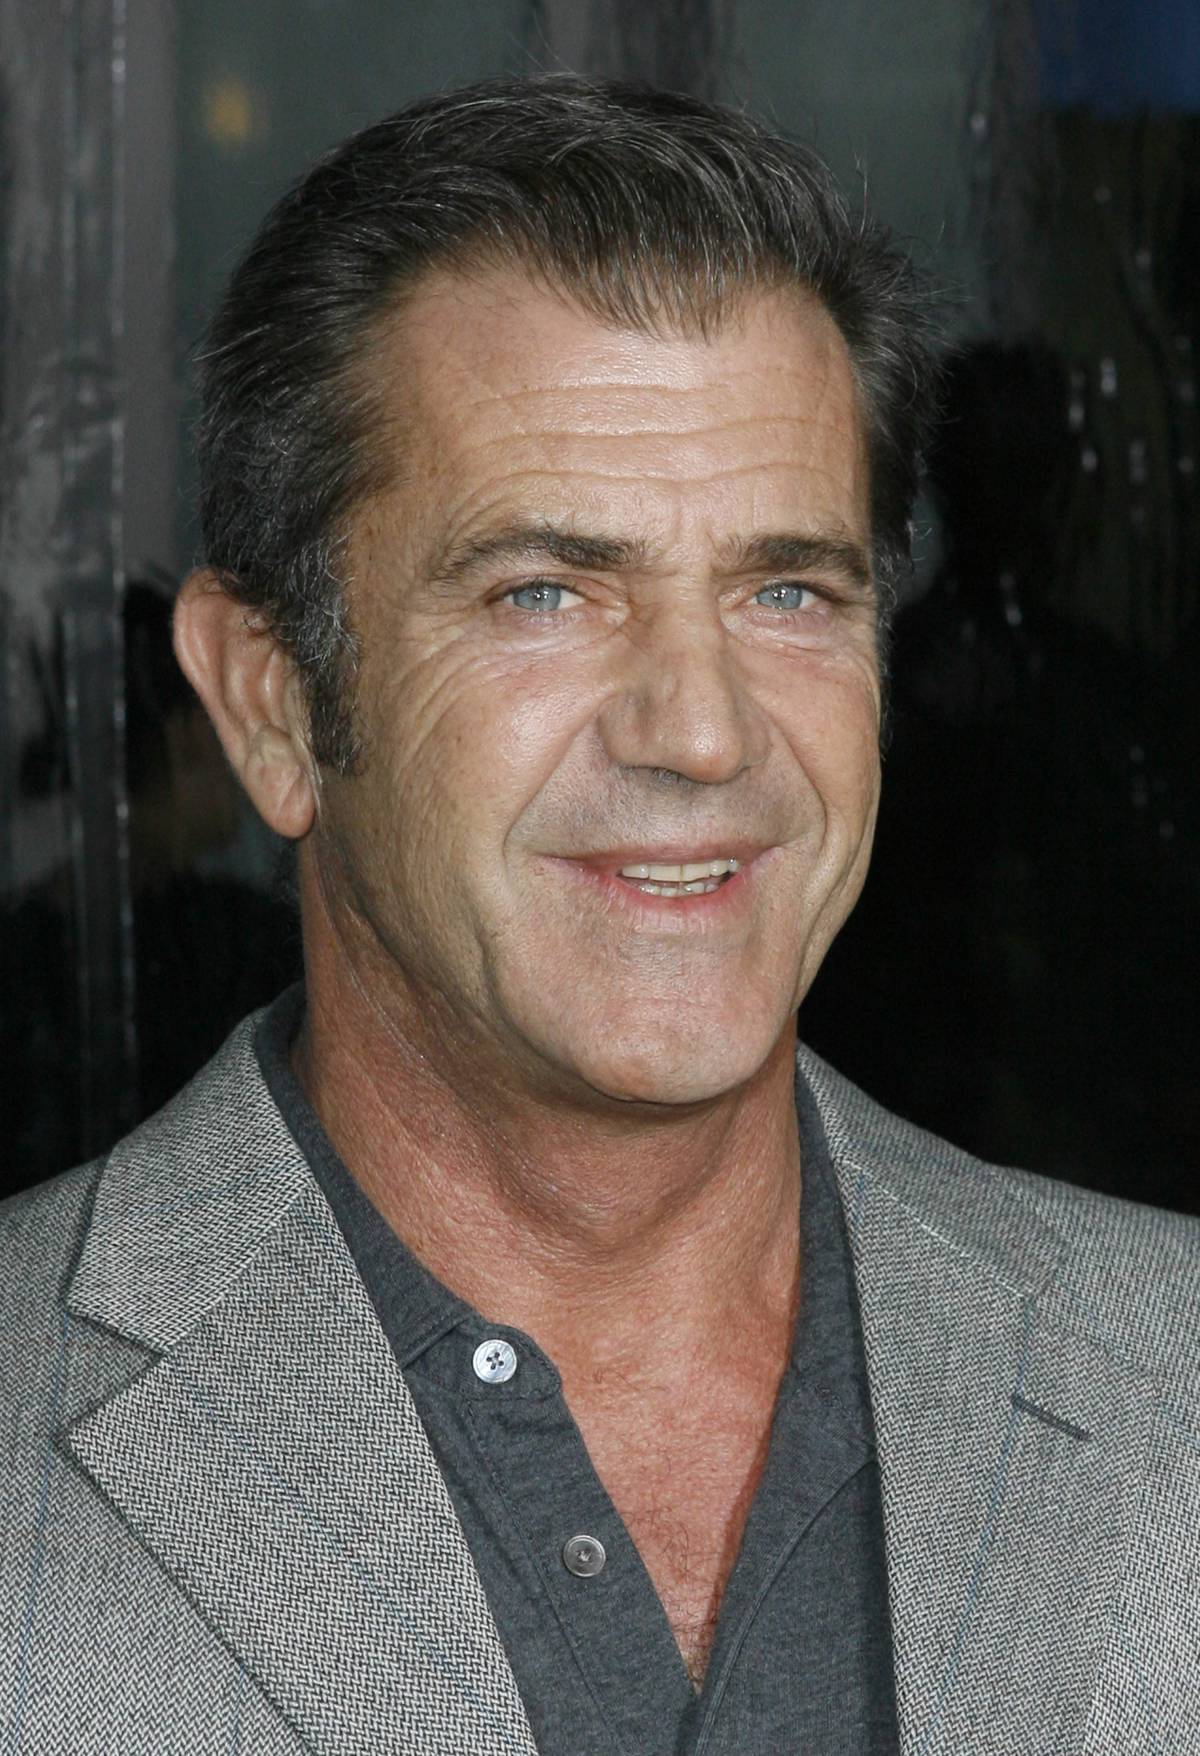 L’8 per mille di Mel Gibson
 
In regalo 9,6 milioni di dollari